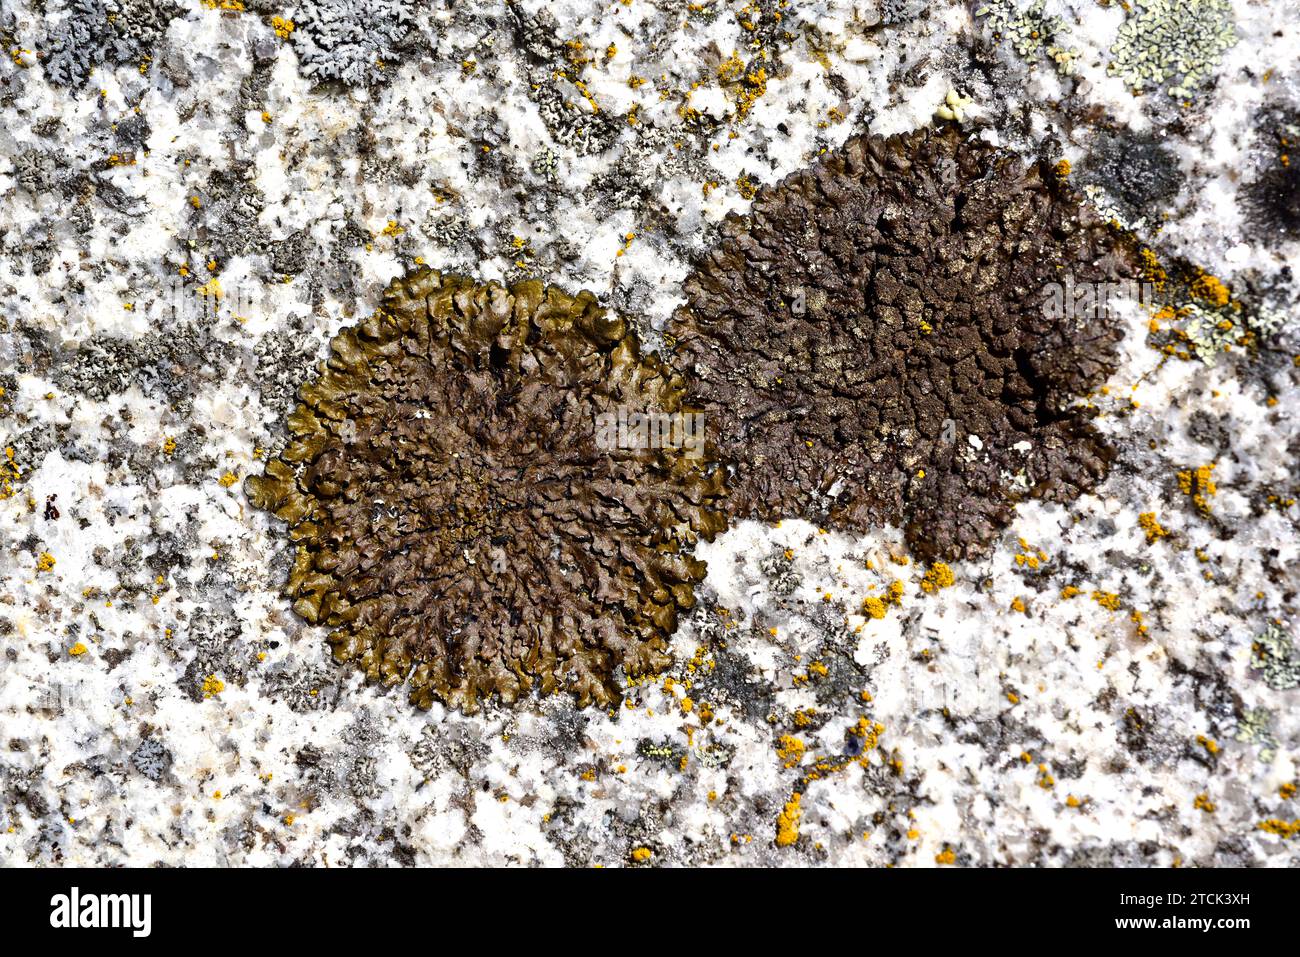 Parmelia pulla, Xanthoparmelia pulla or Neofuscelia pulla (left) and Parmelia verruculifera or Xanthoparmelia verruculifera (right) are two foliose li Stock Photo